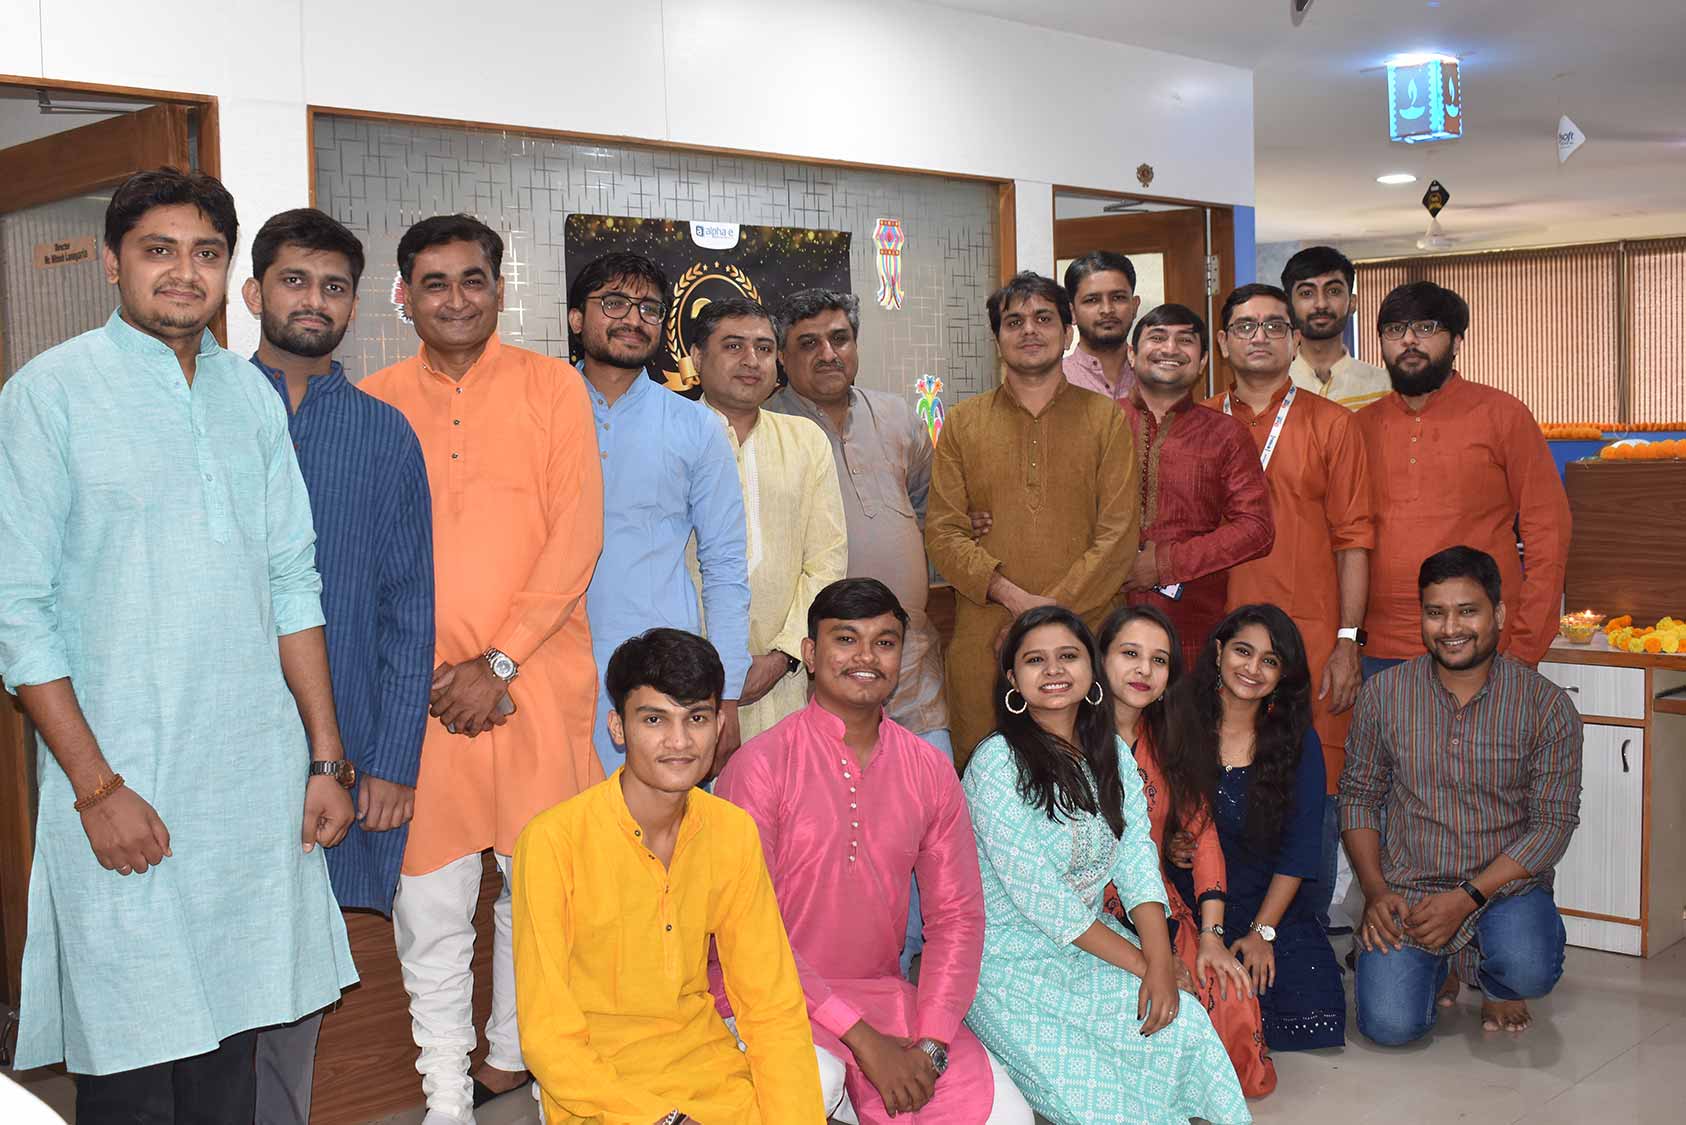 Diwali Celebration at Office